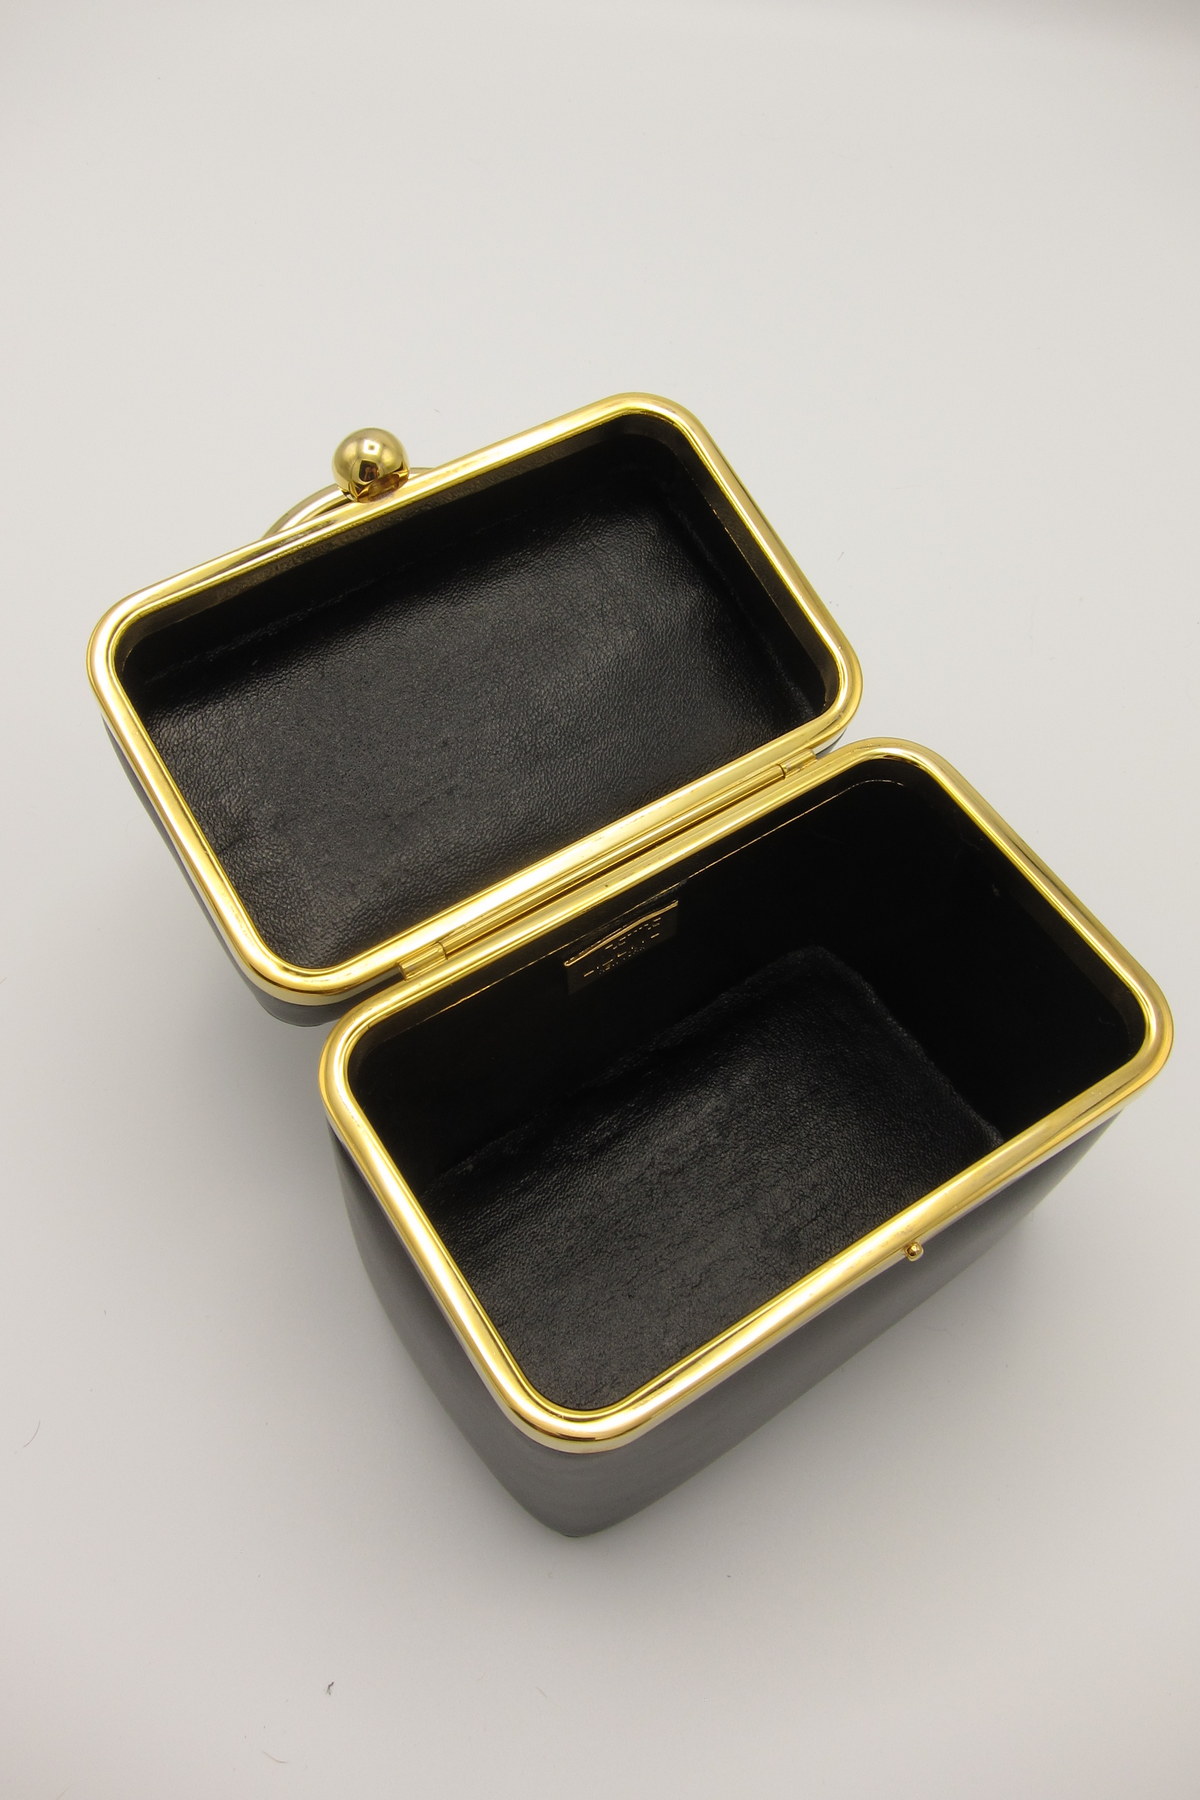 Vintage Black and Gold Mini-Box Purse